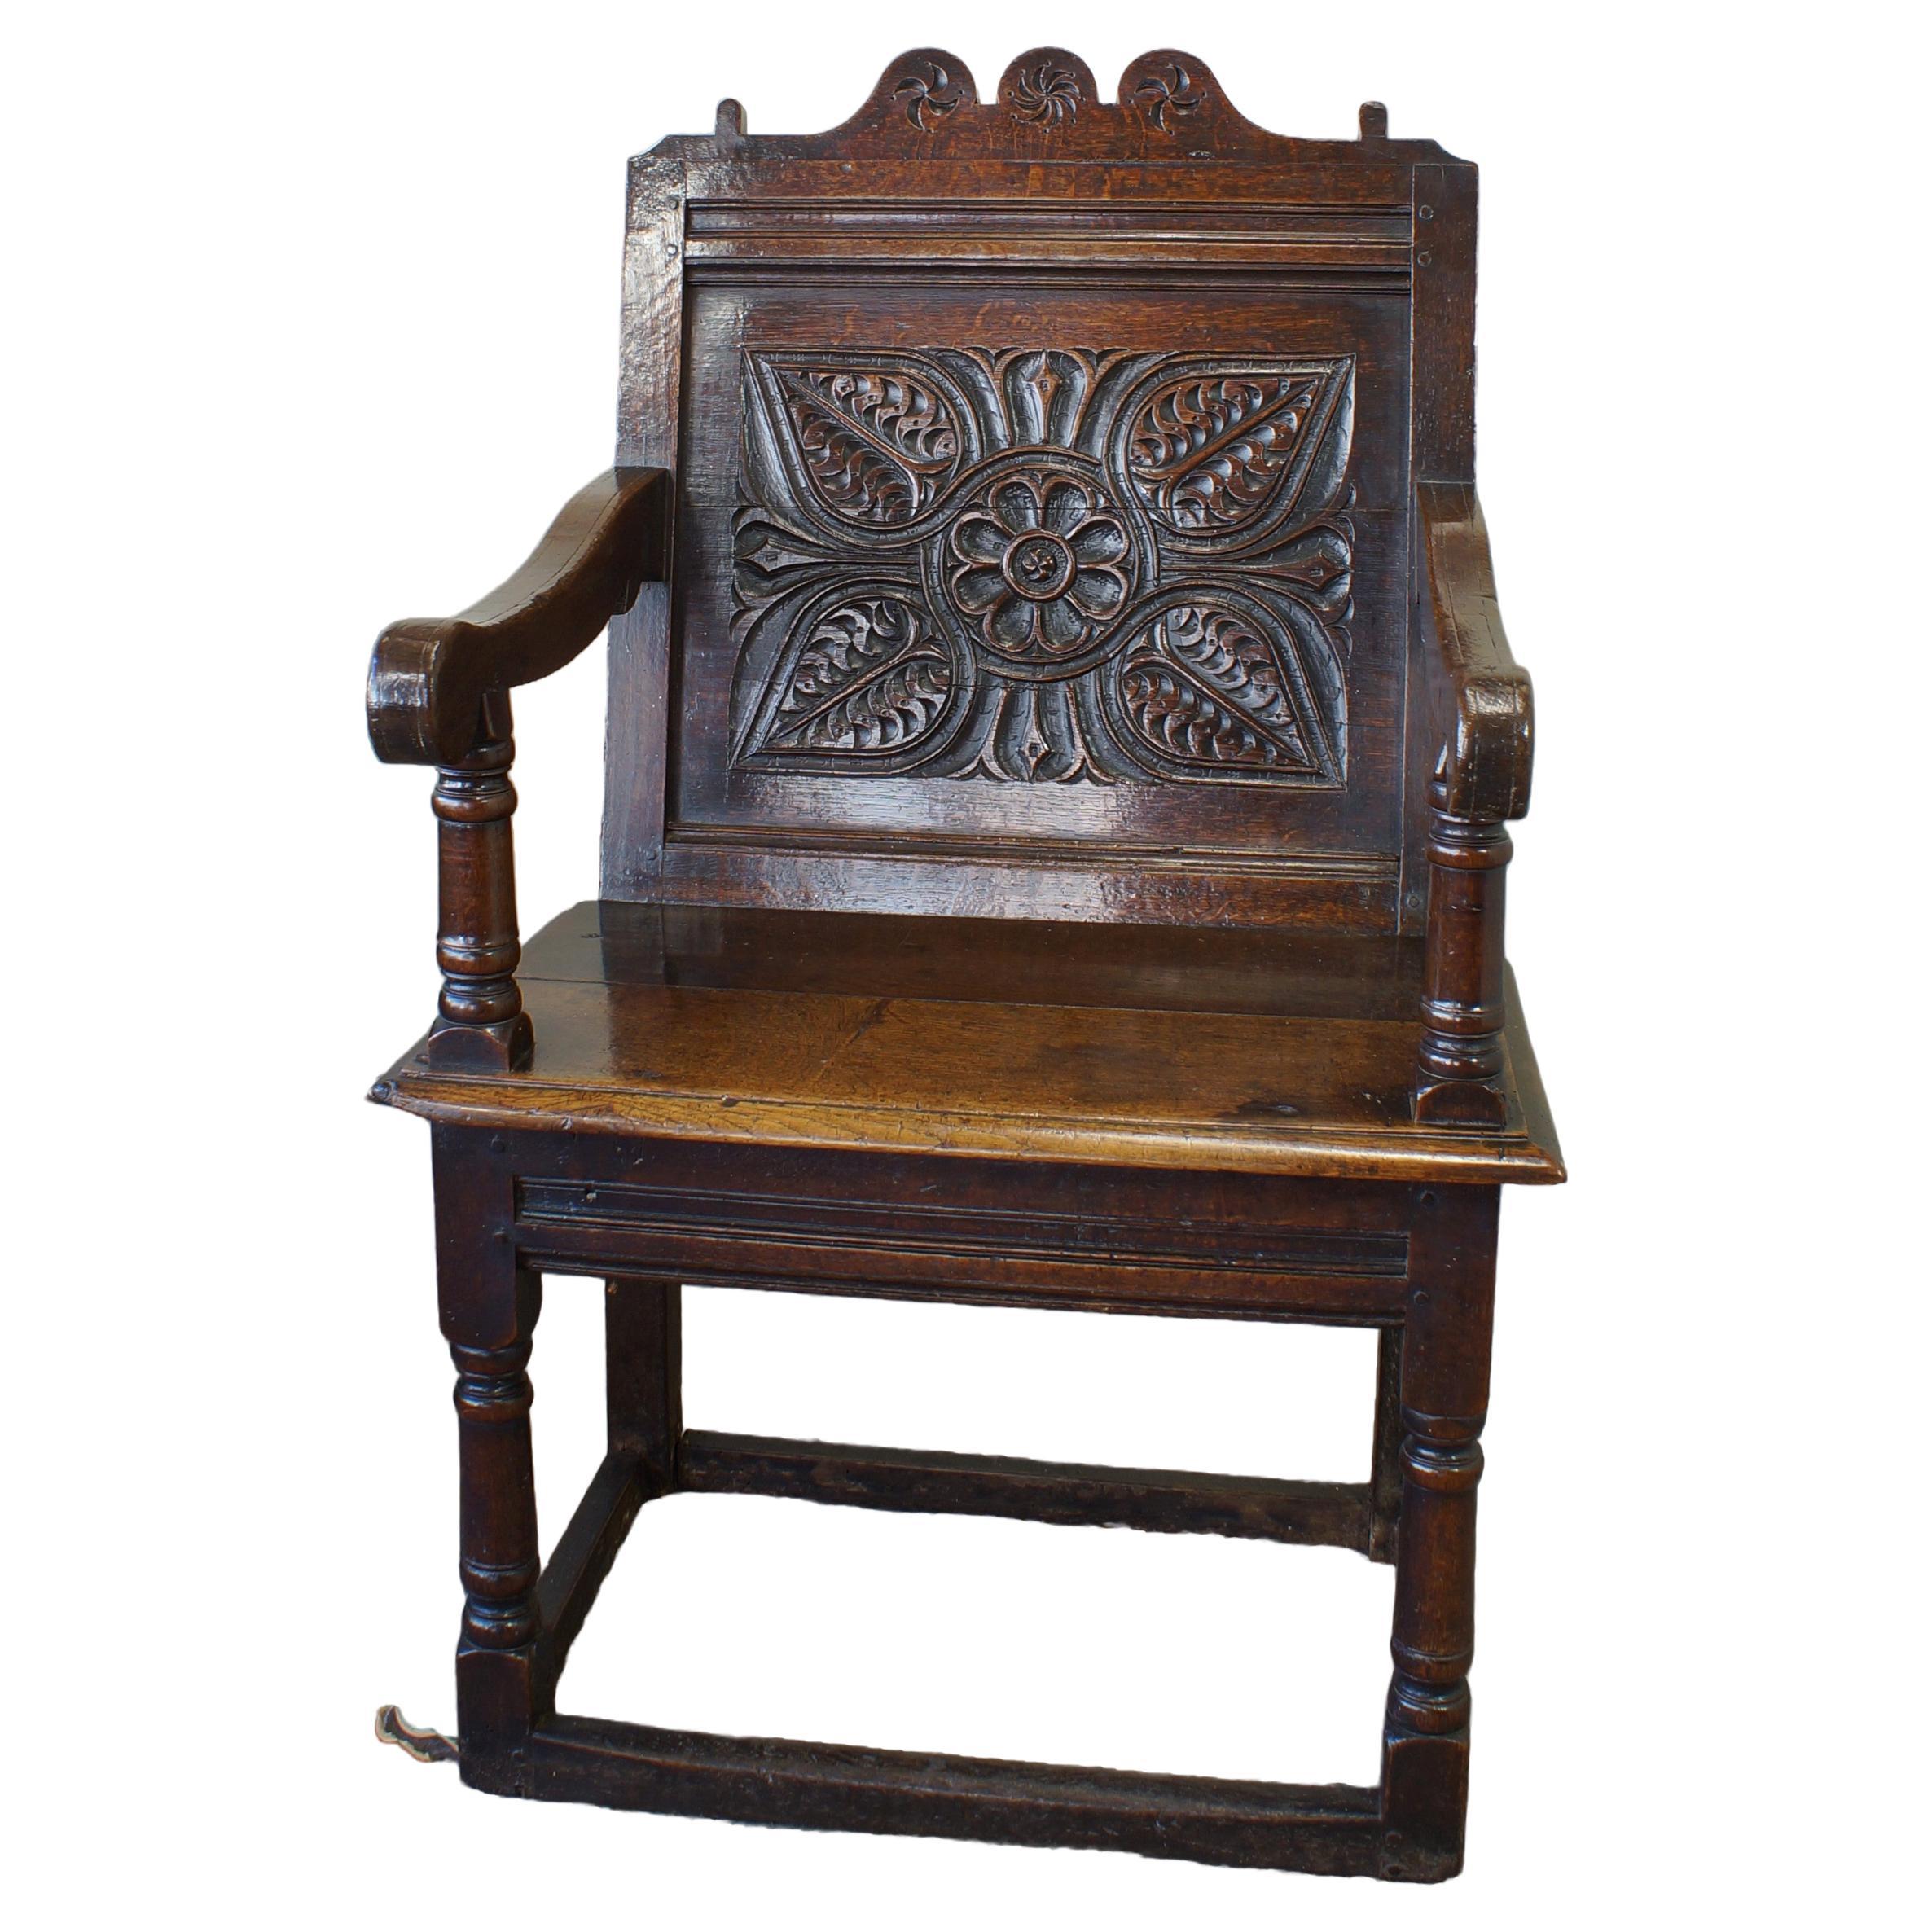 17. Jahrhundert  Wainscot-Sessel aus englischer Eiche.